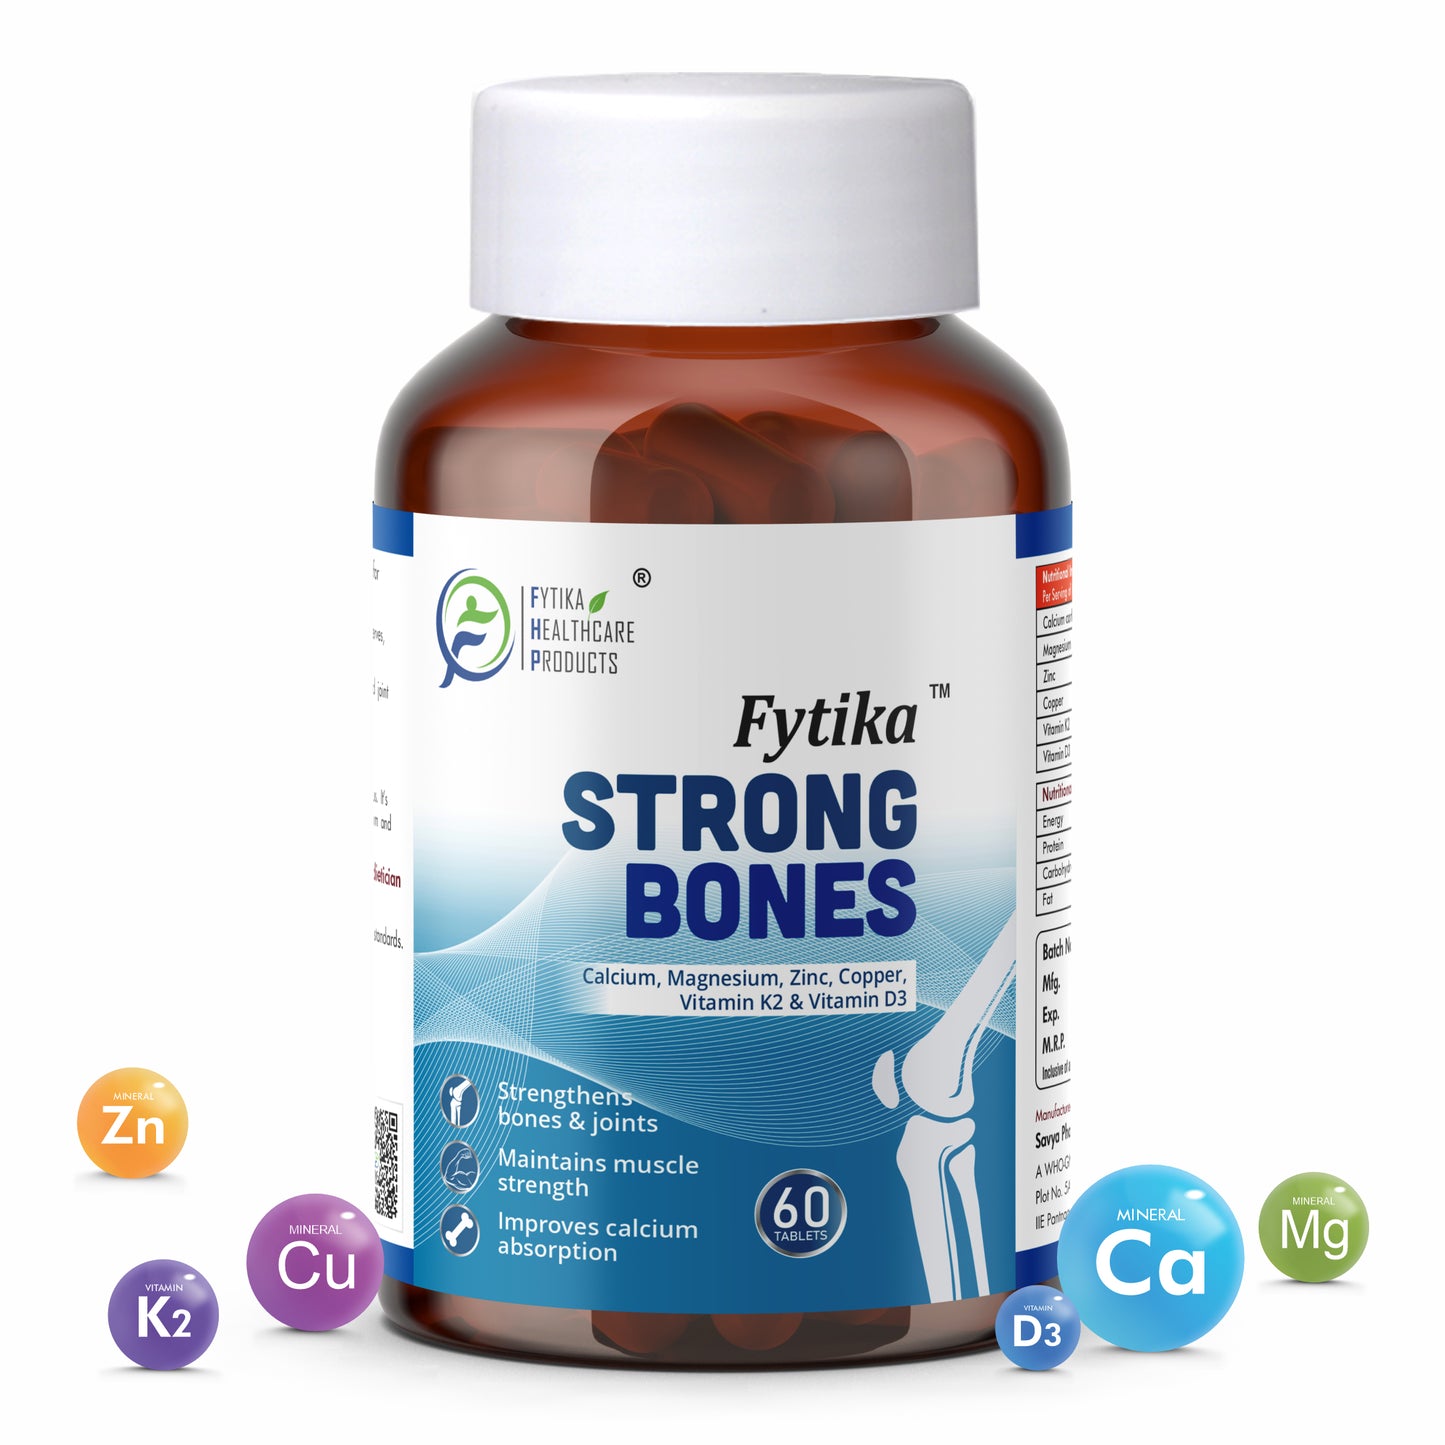 Get FREE Fytika Strong Bones with Fytika Vita 365